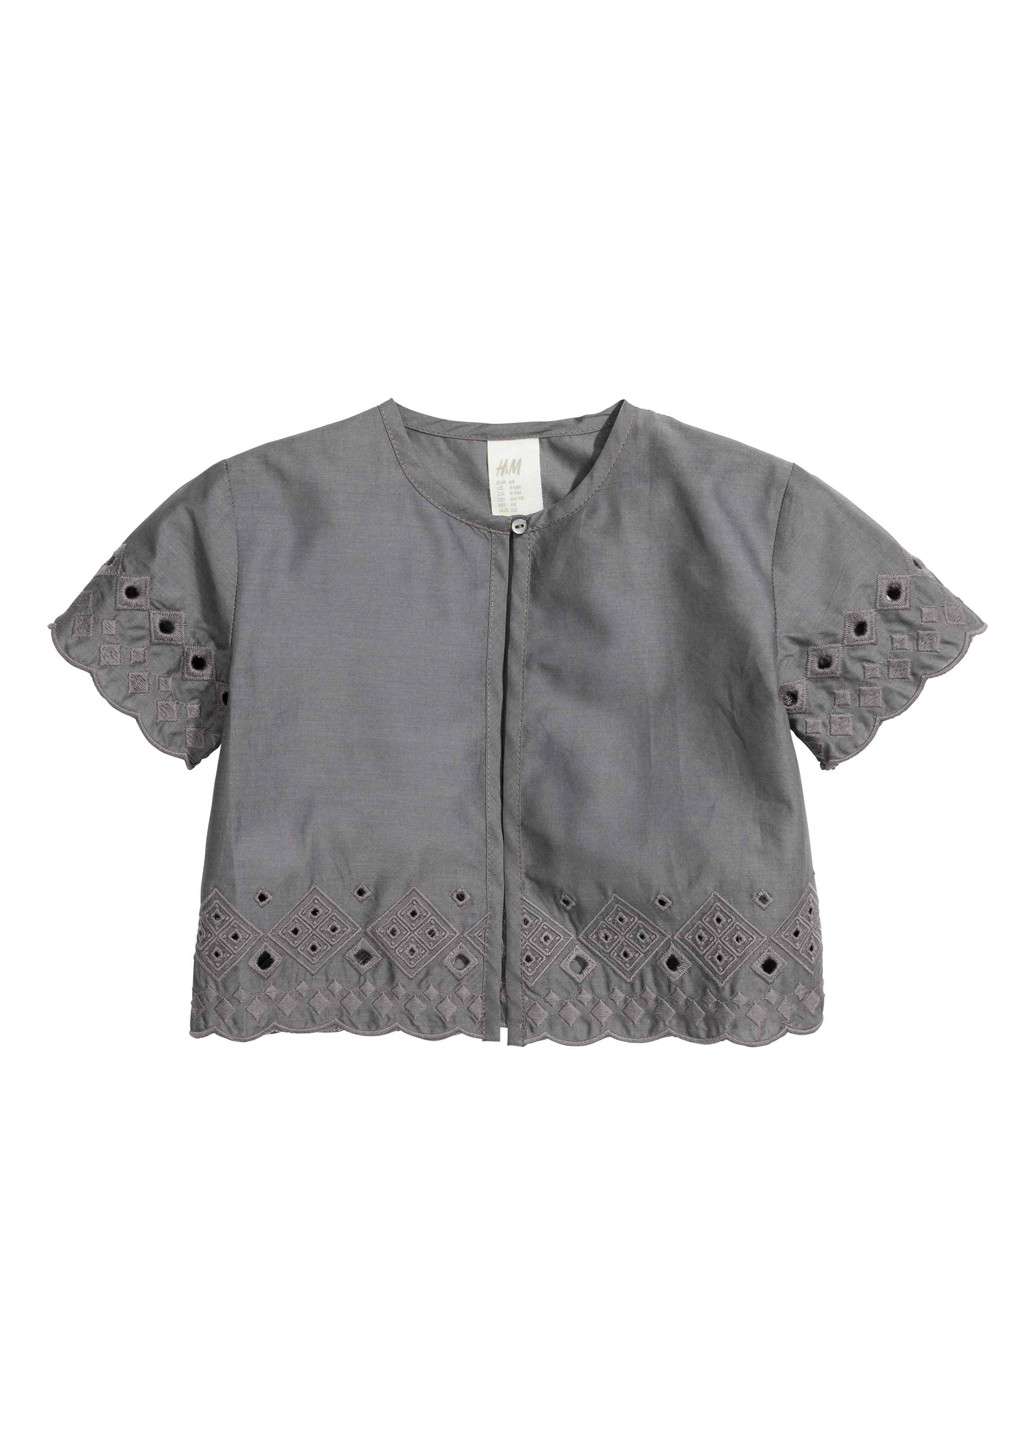 Темно-серая однотонная блузка H&M летняя